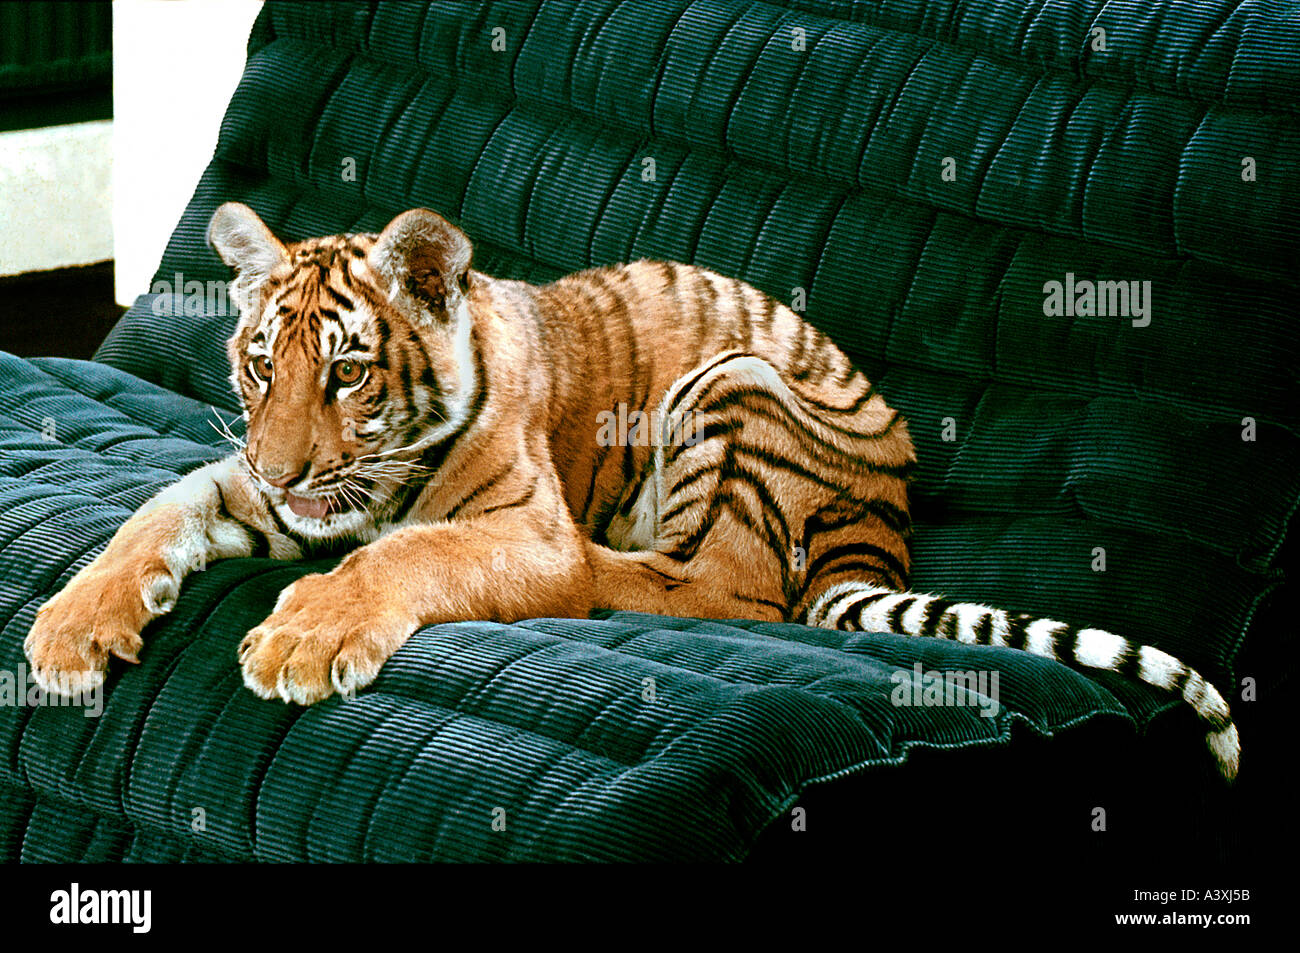 tiger cub on sofa Stock Photo